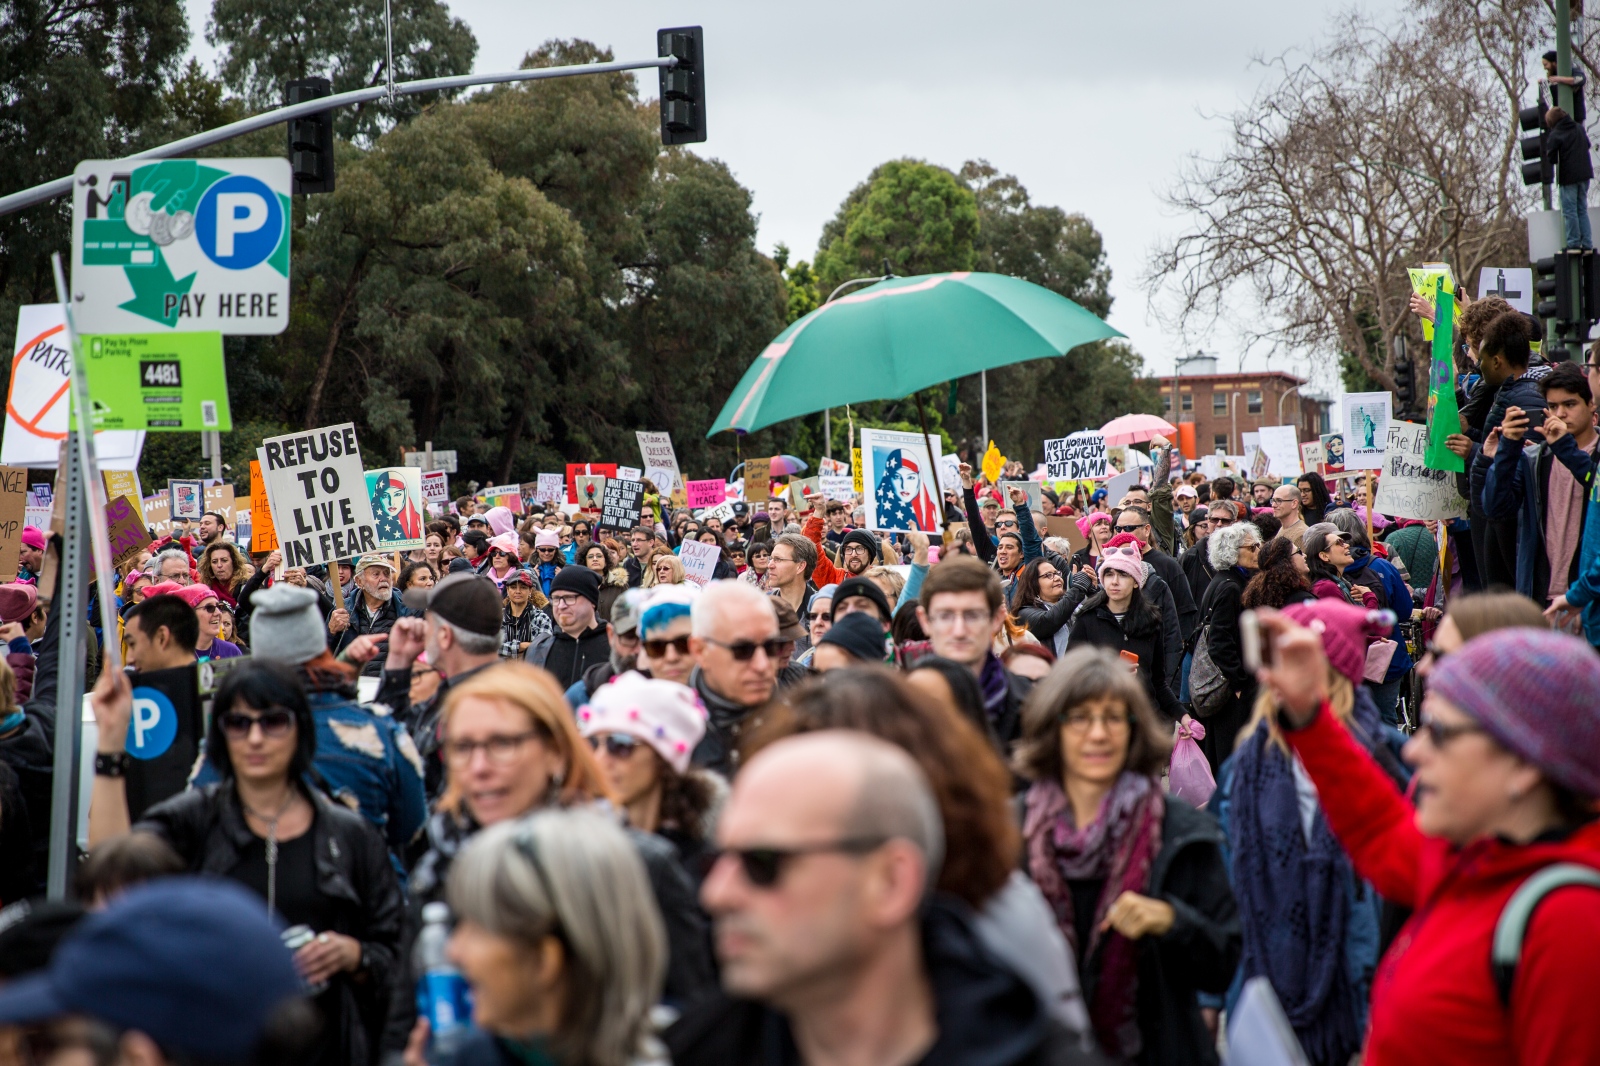 Women's March Oakland, CA  - The Women's March in Oakland, CA, January 21, 2017.